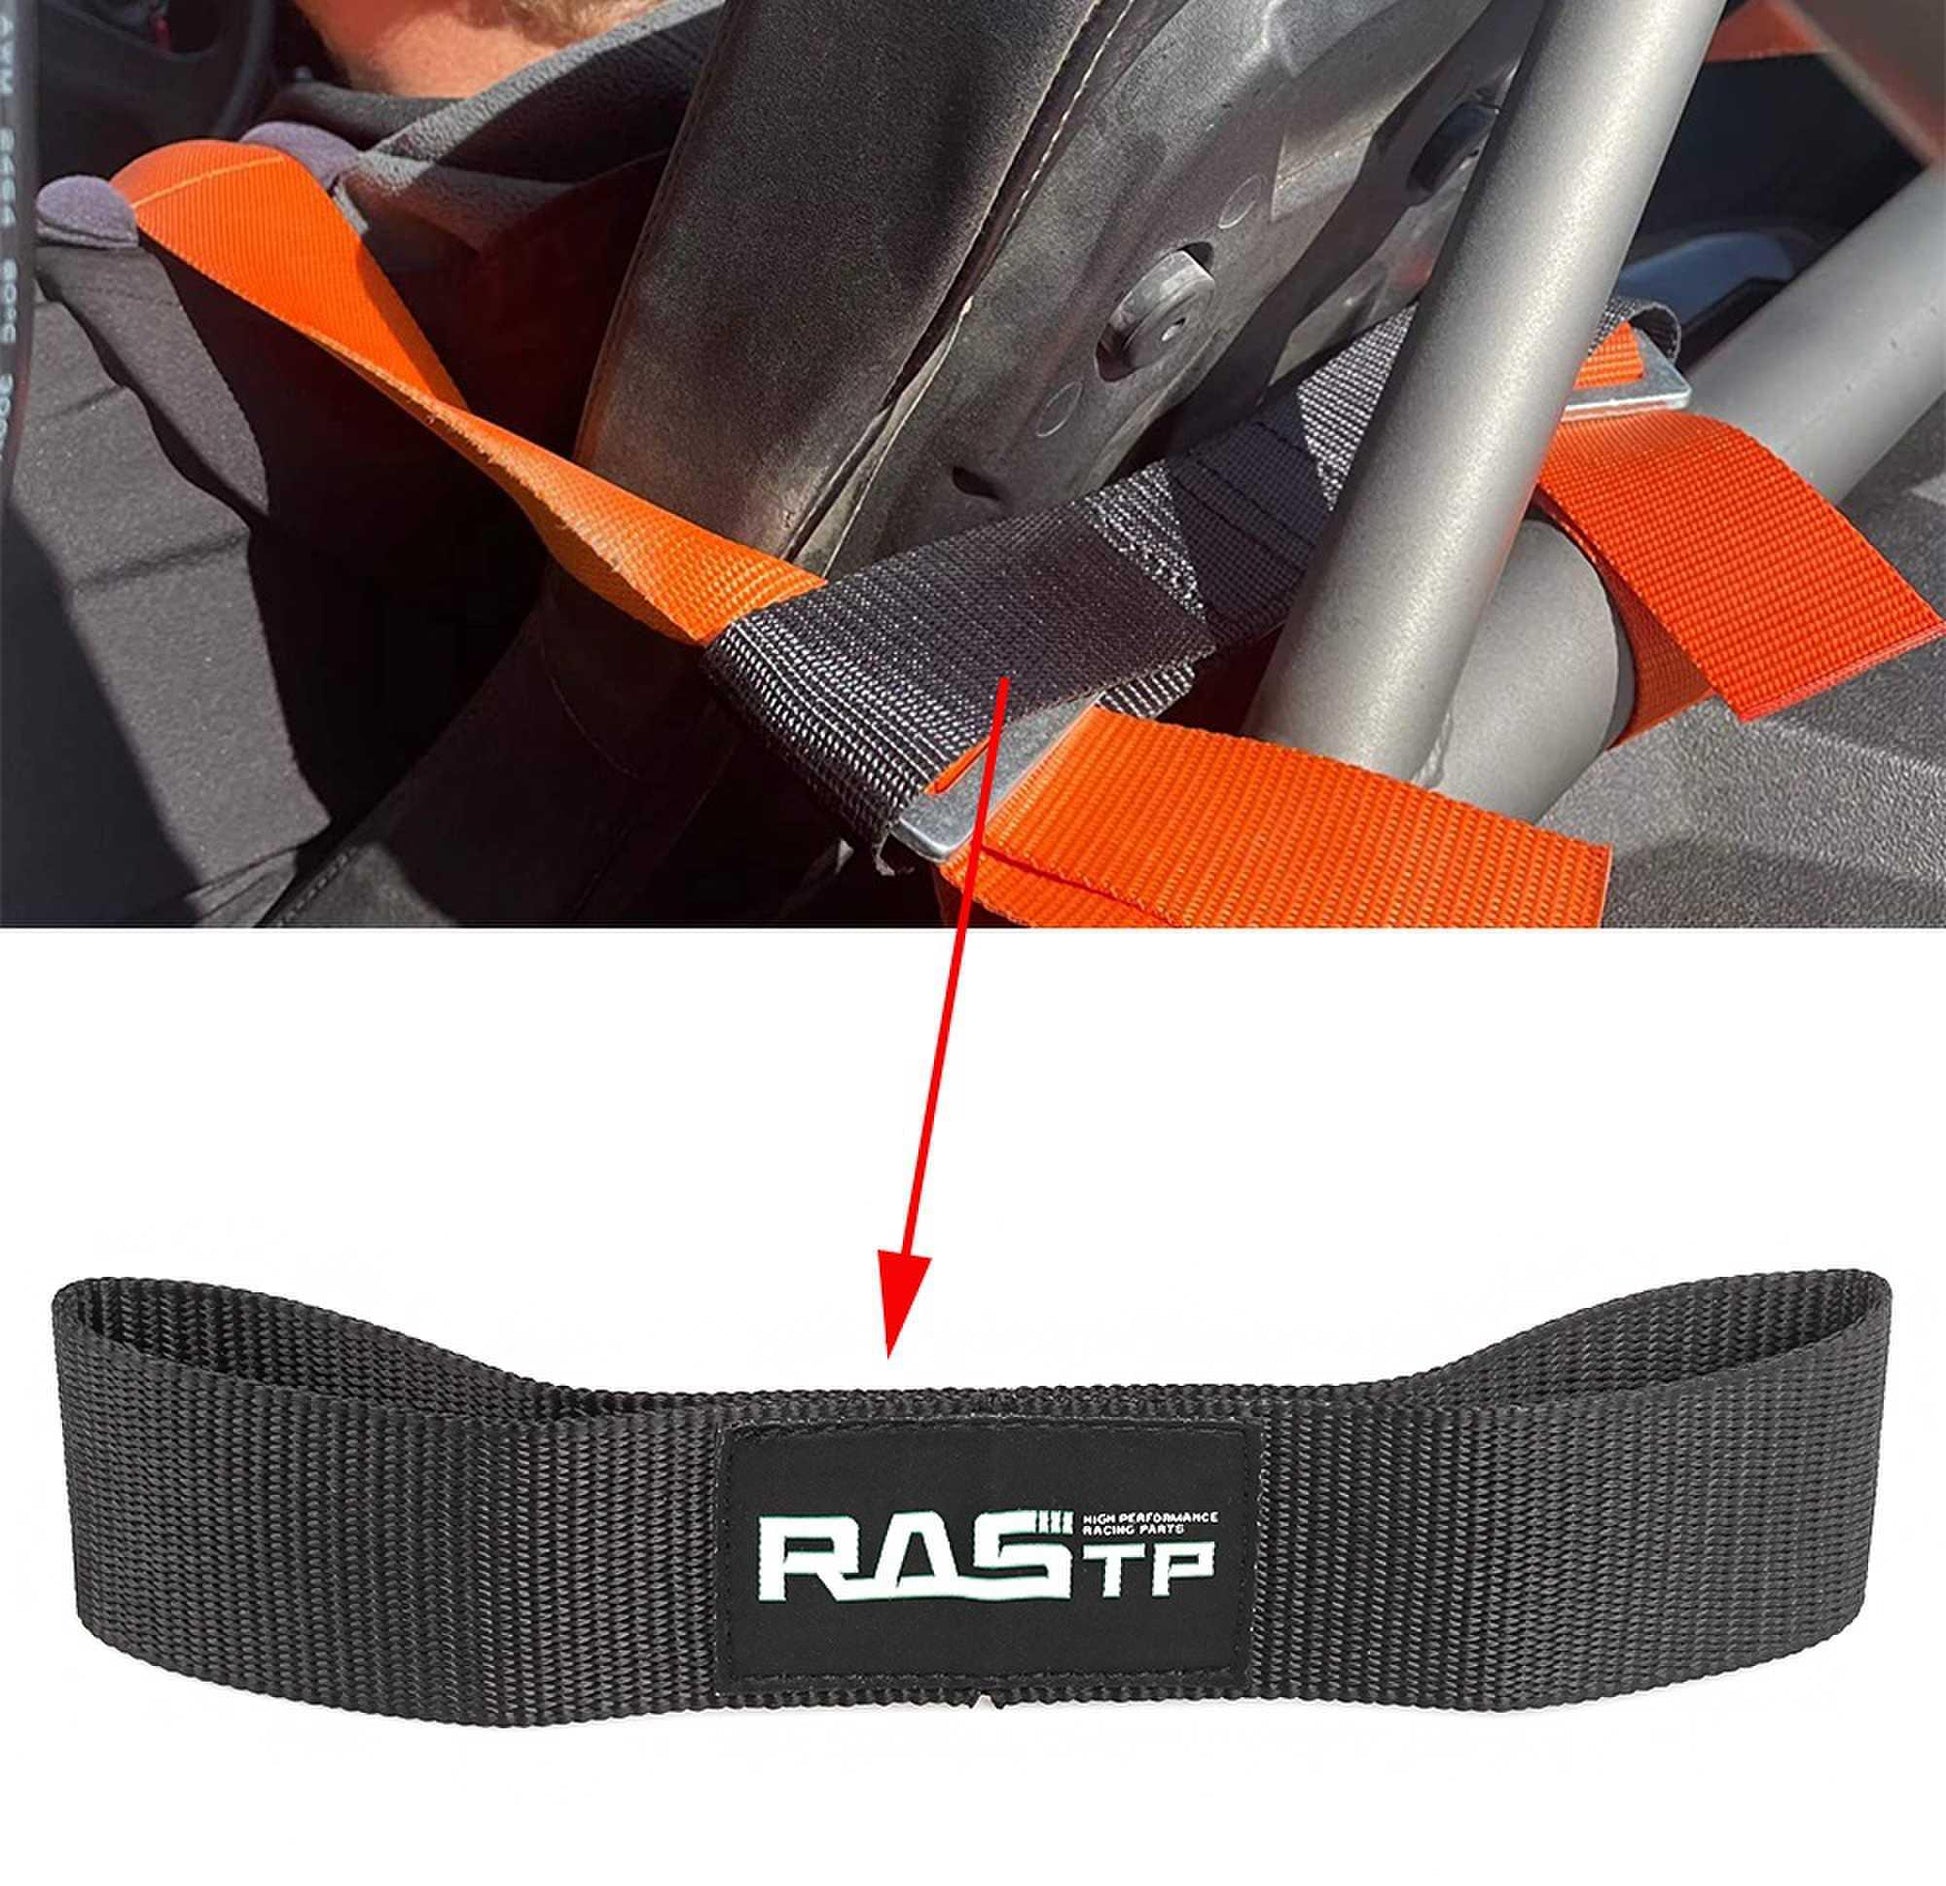 RASTP 4 And 5 Point Harness Belt Holder/Strap - RASTP